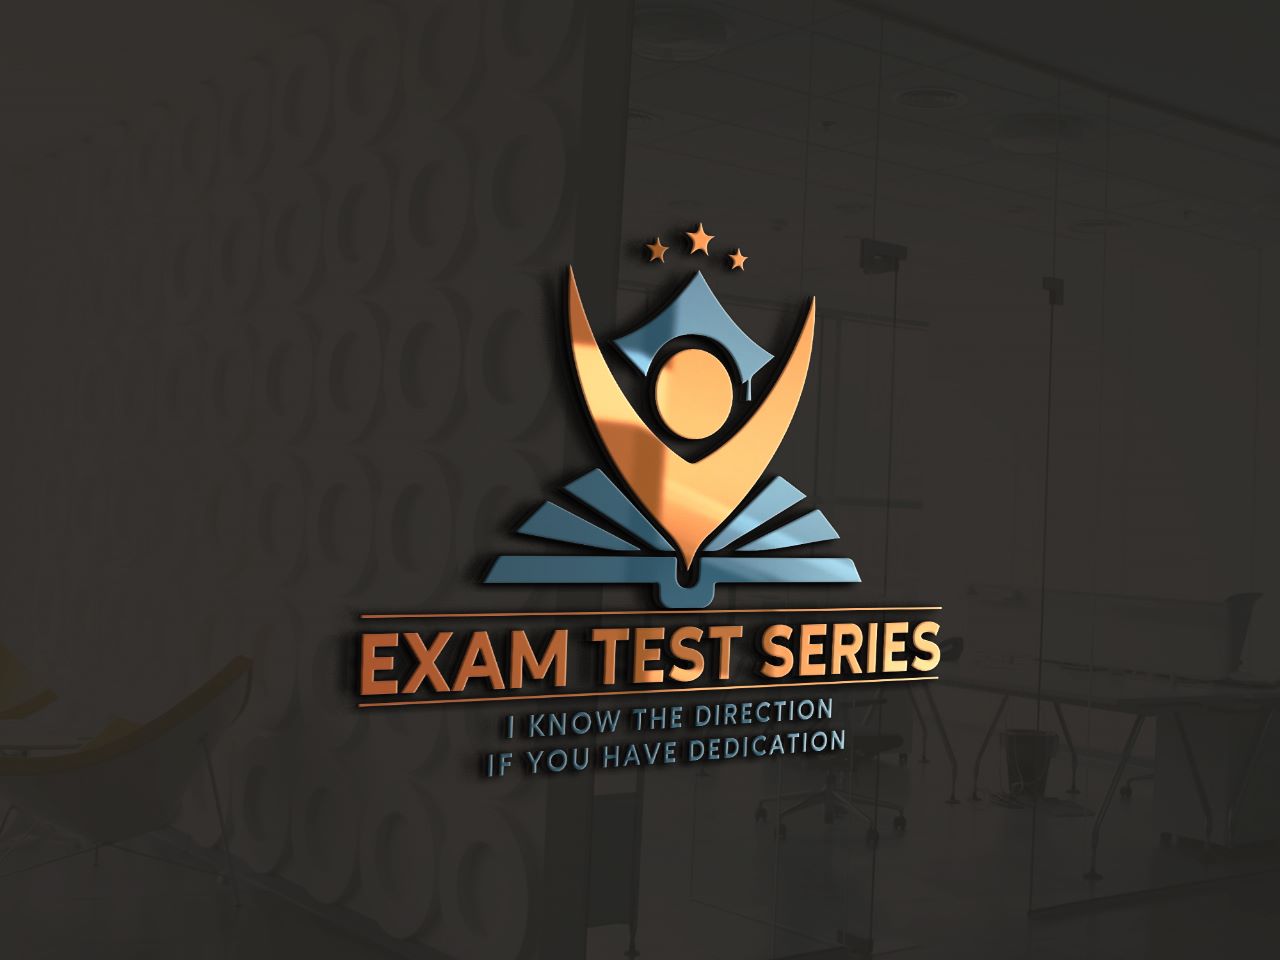 Exam Test Series